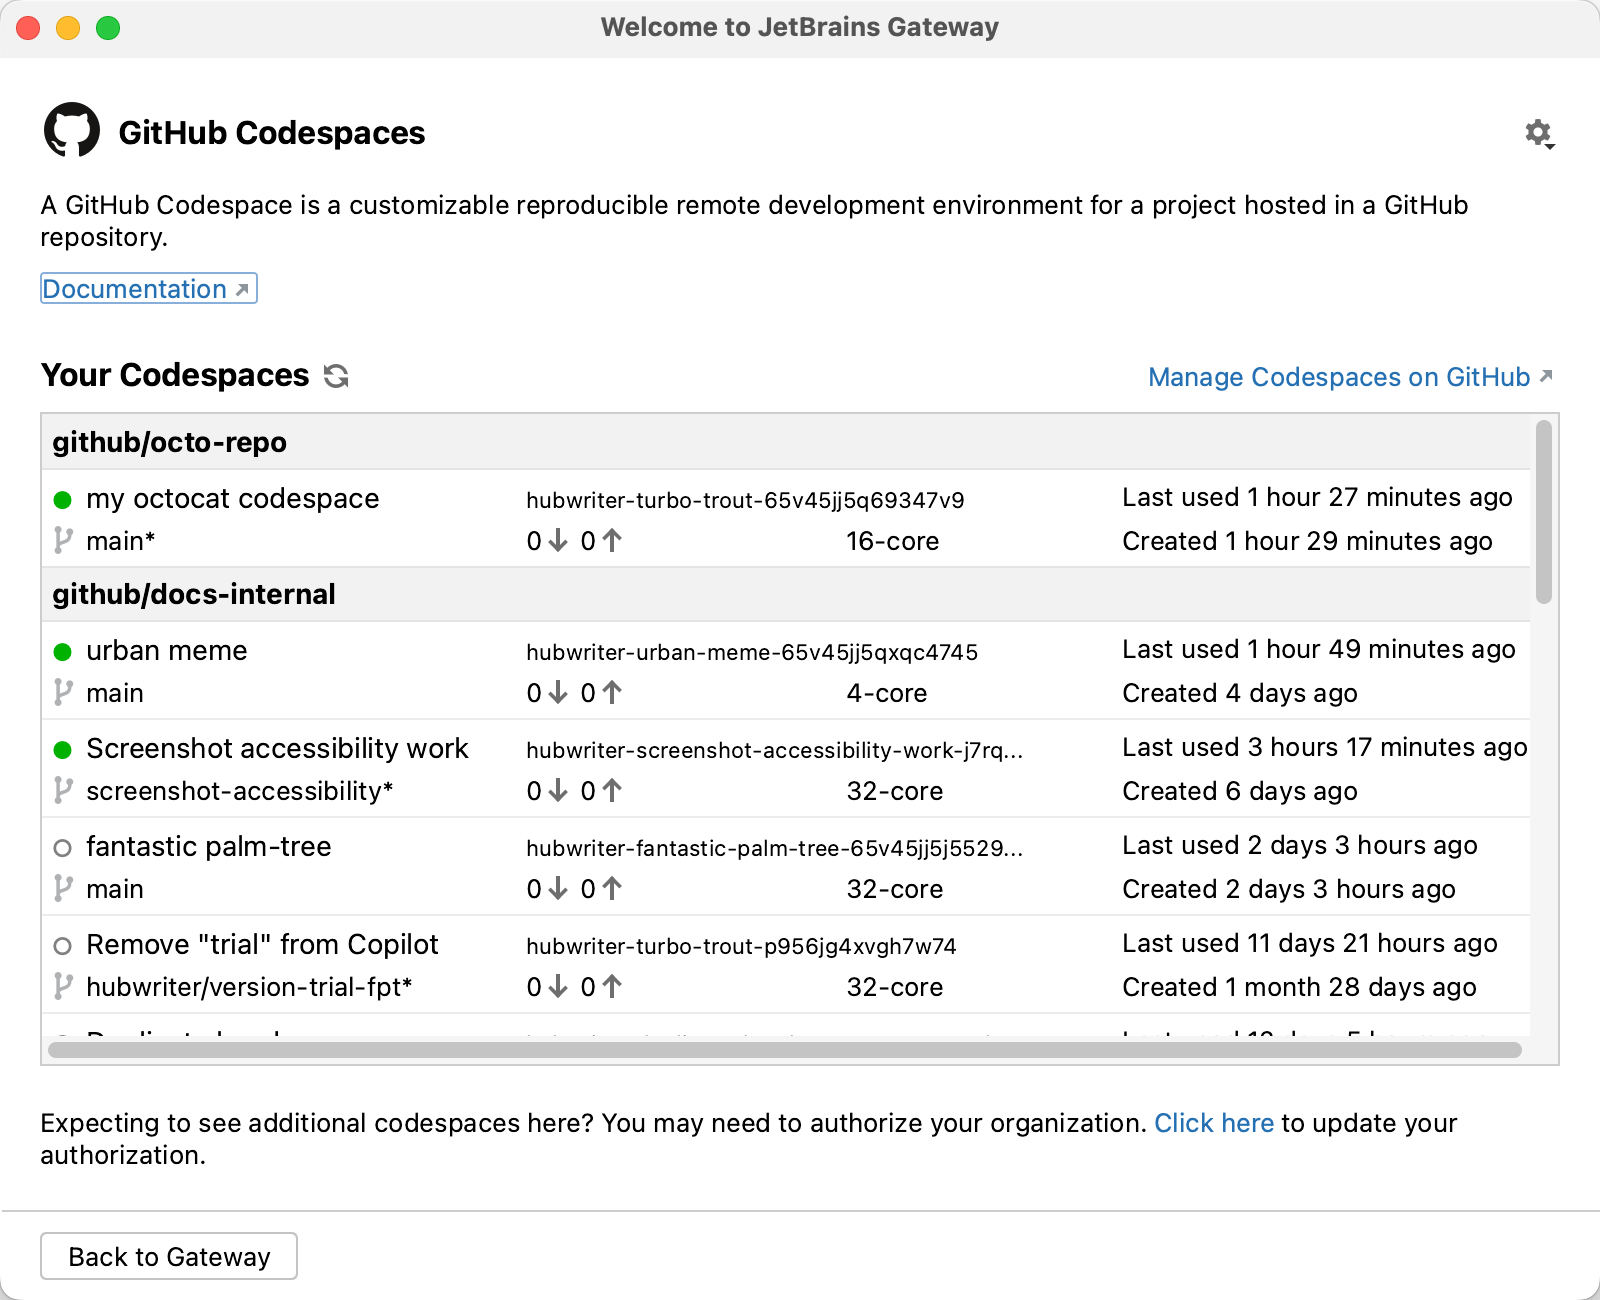 Screenshot of the JetBrains Gateway codespace list